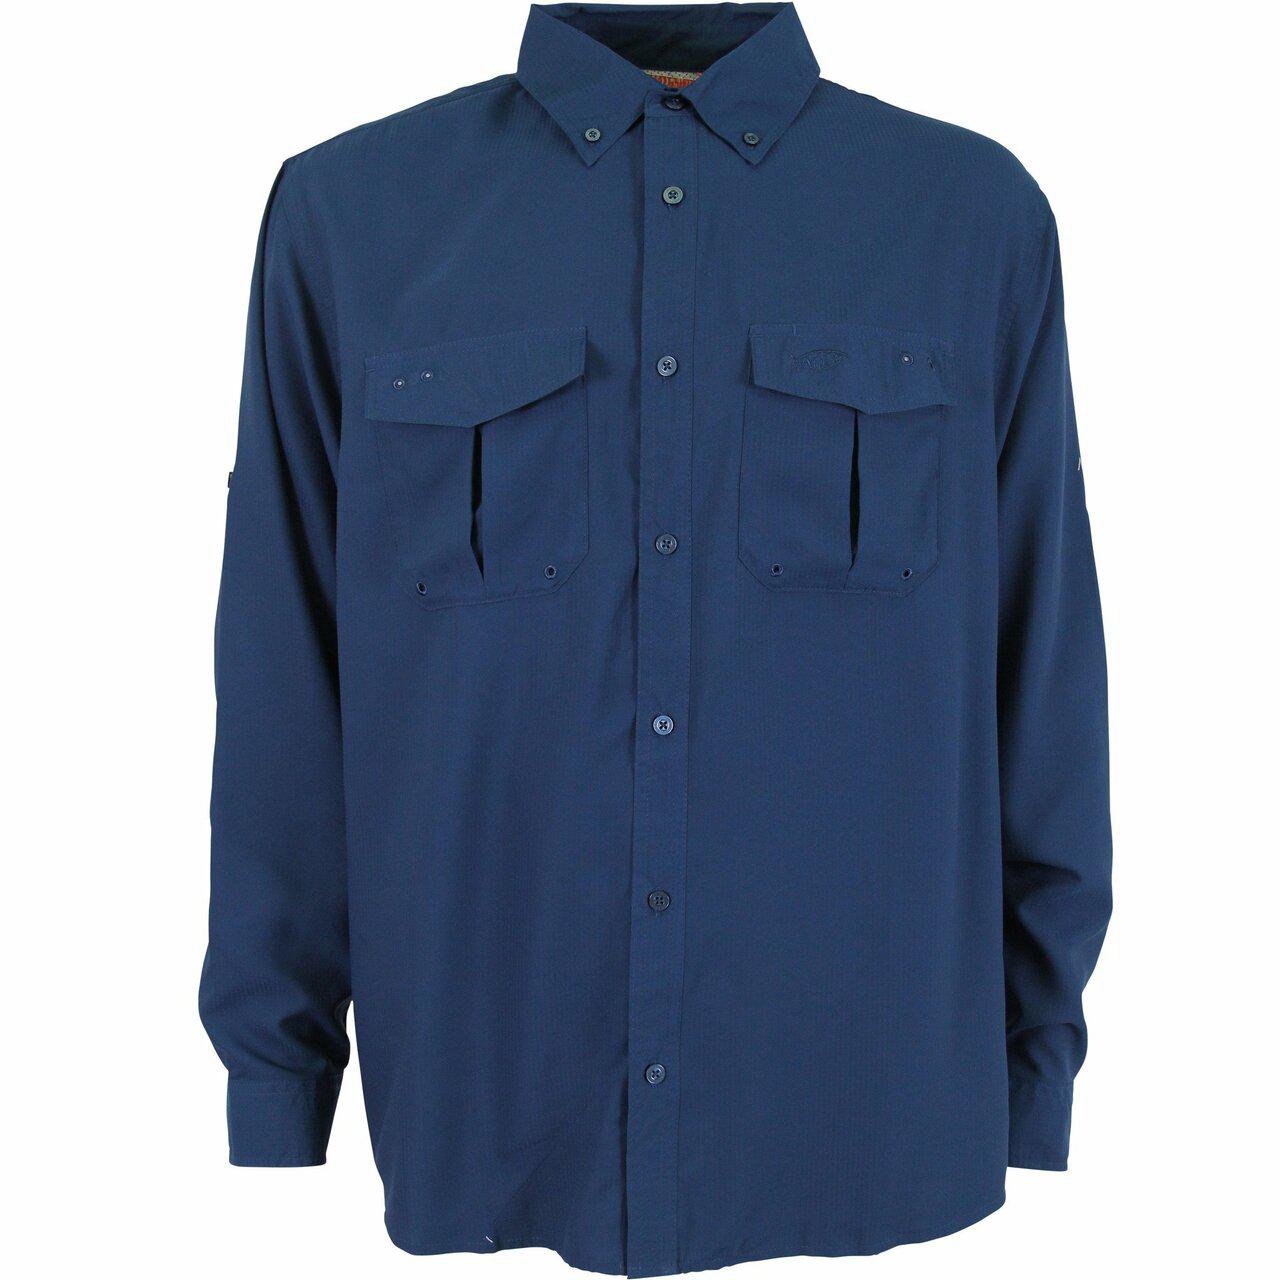 Rangle Vented Long Sleeve Shirt - Navy Blue